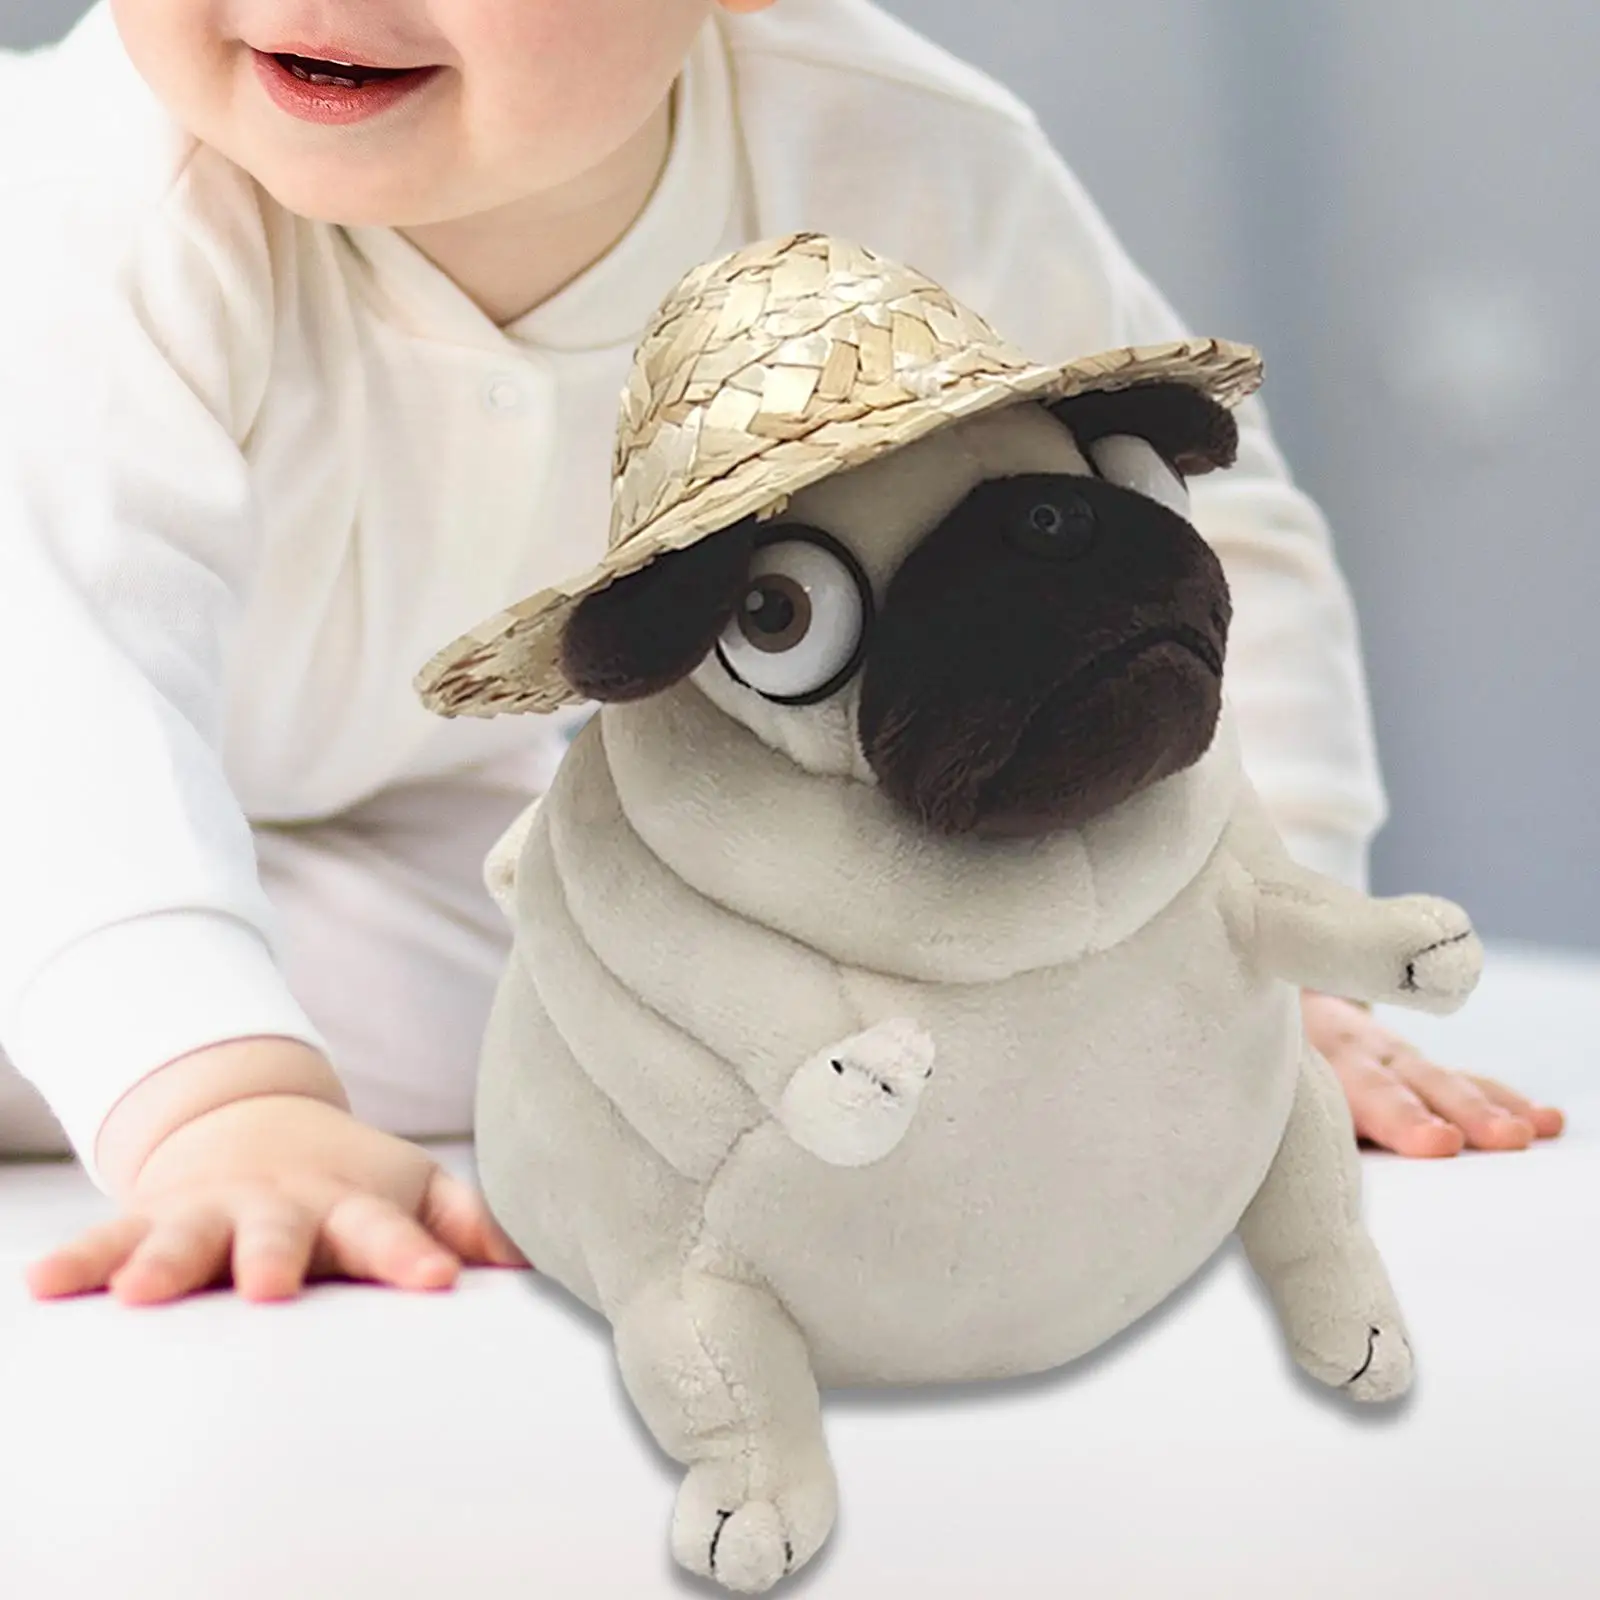 Plush Animal Toy with Straw Figurine Stuffed Animal for Decor Children Toy